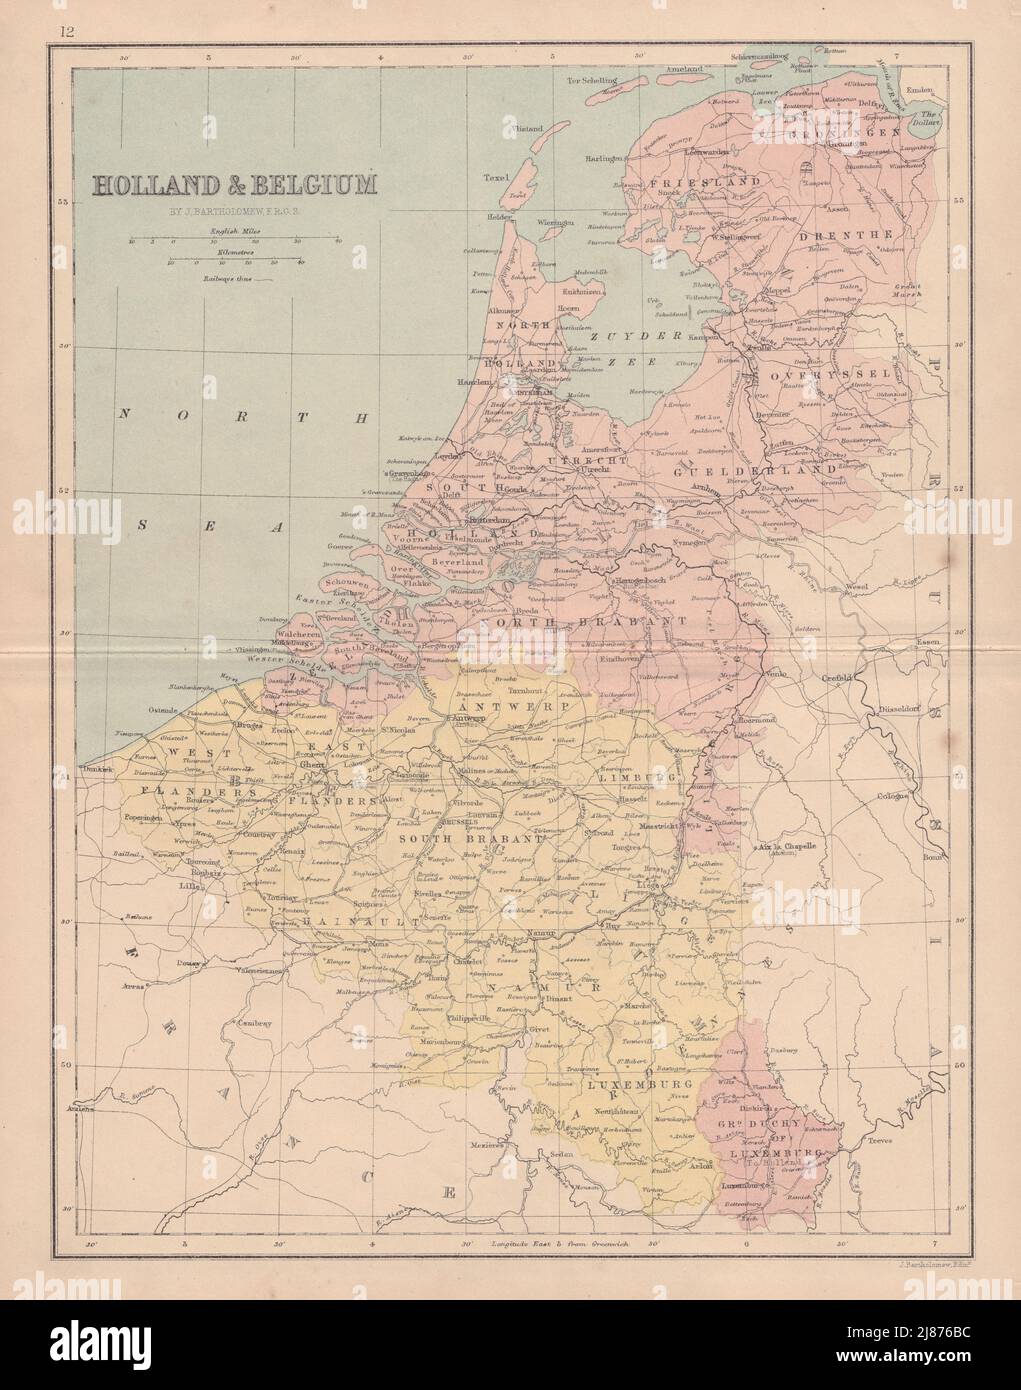 BENELUX. Netherlands before reclamation of Zuiderzee polders. COLLINS 1873 map Stock Photo